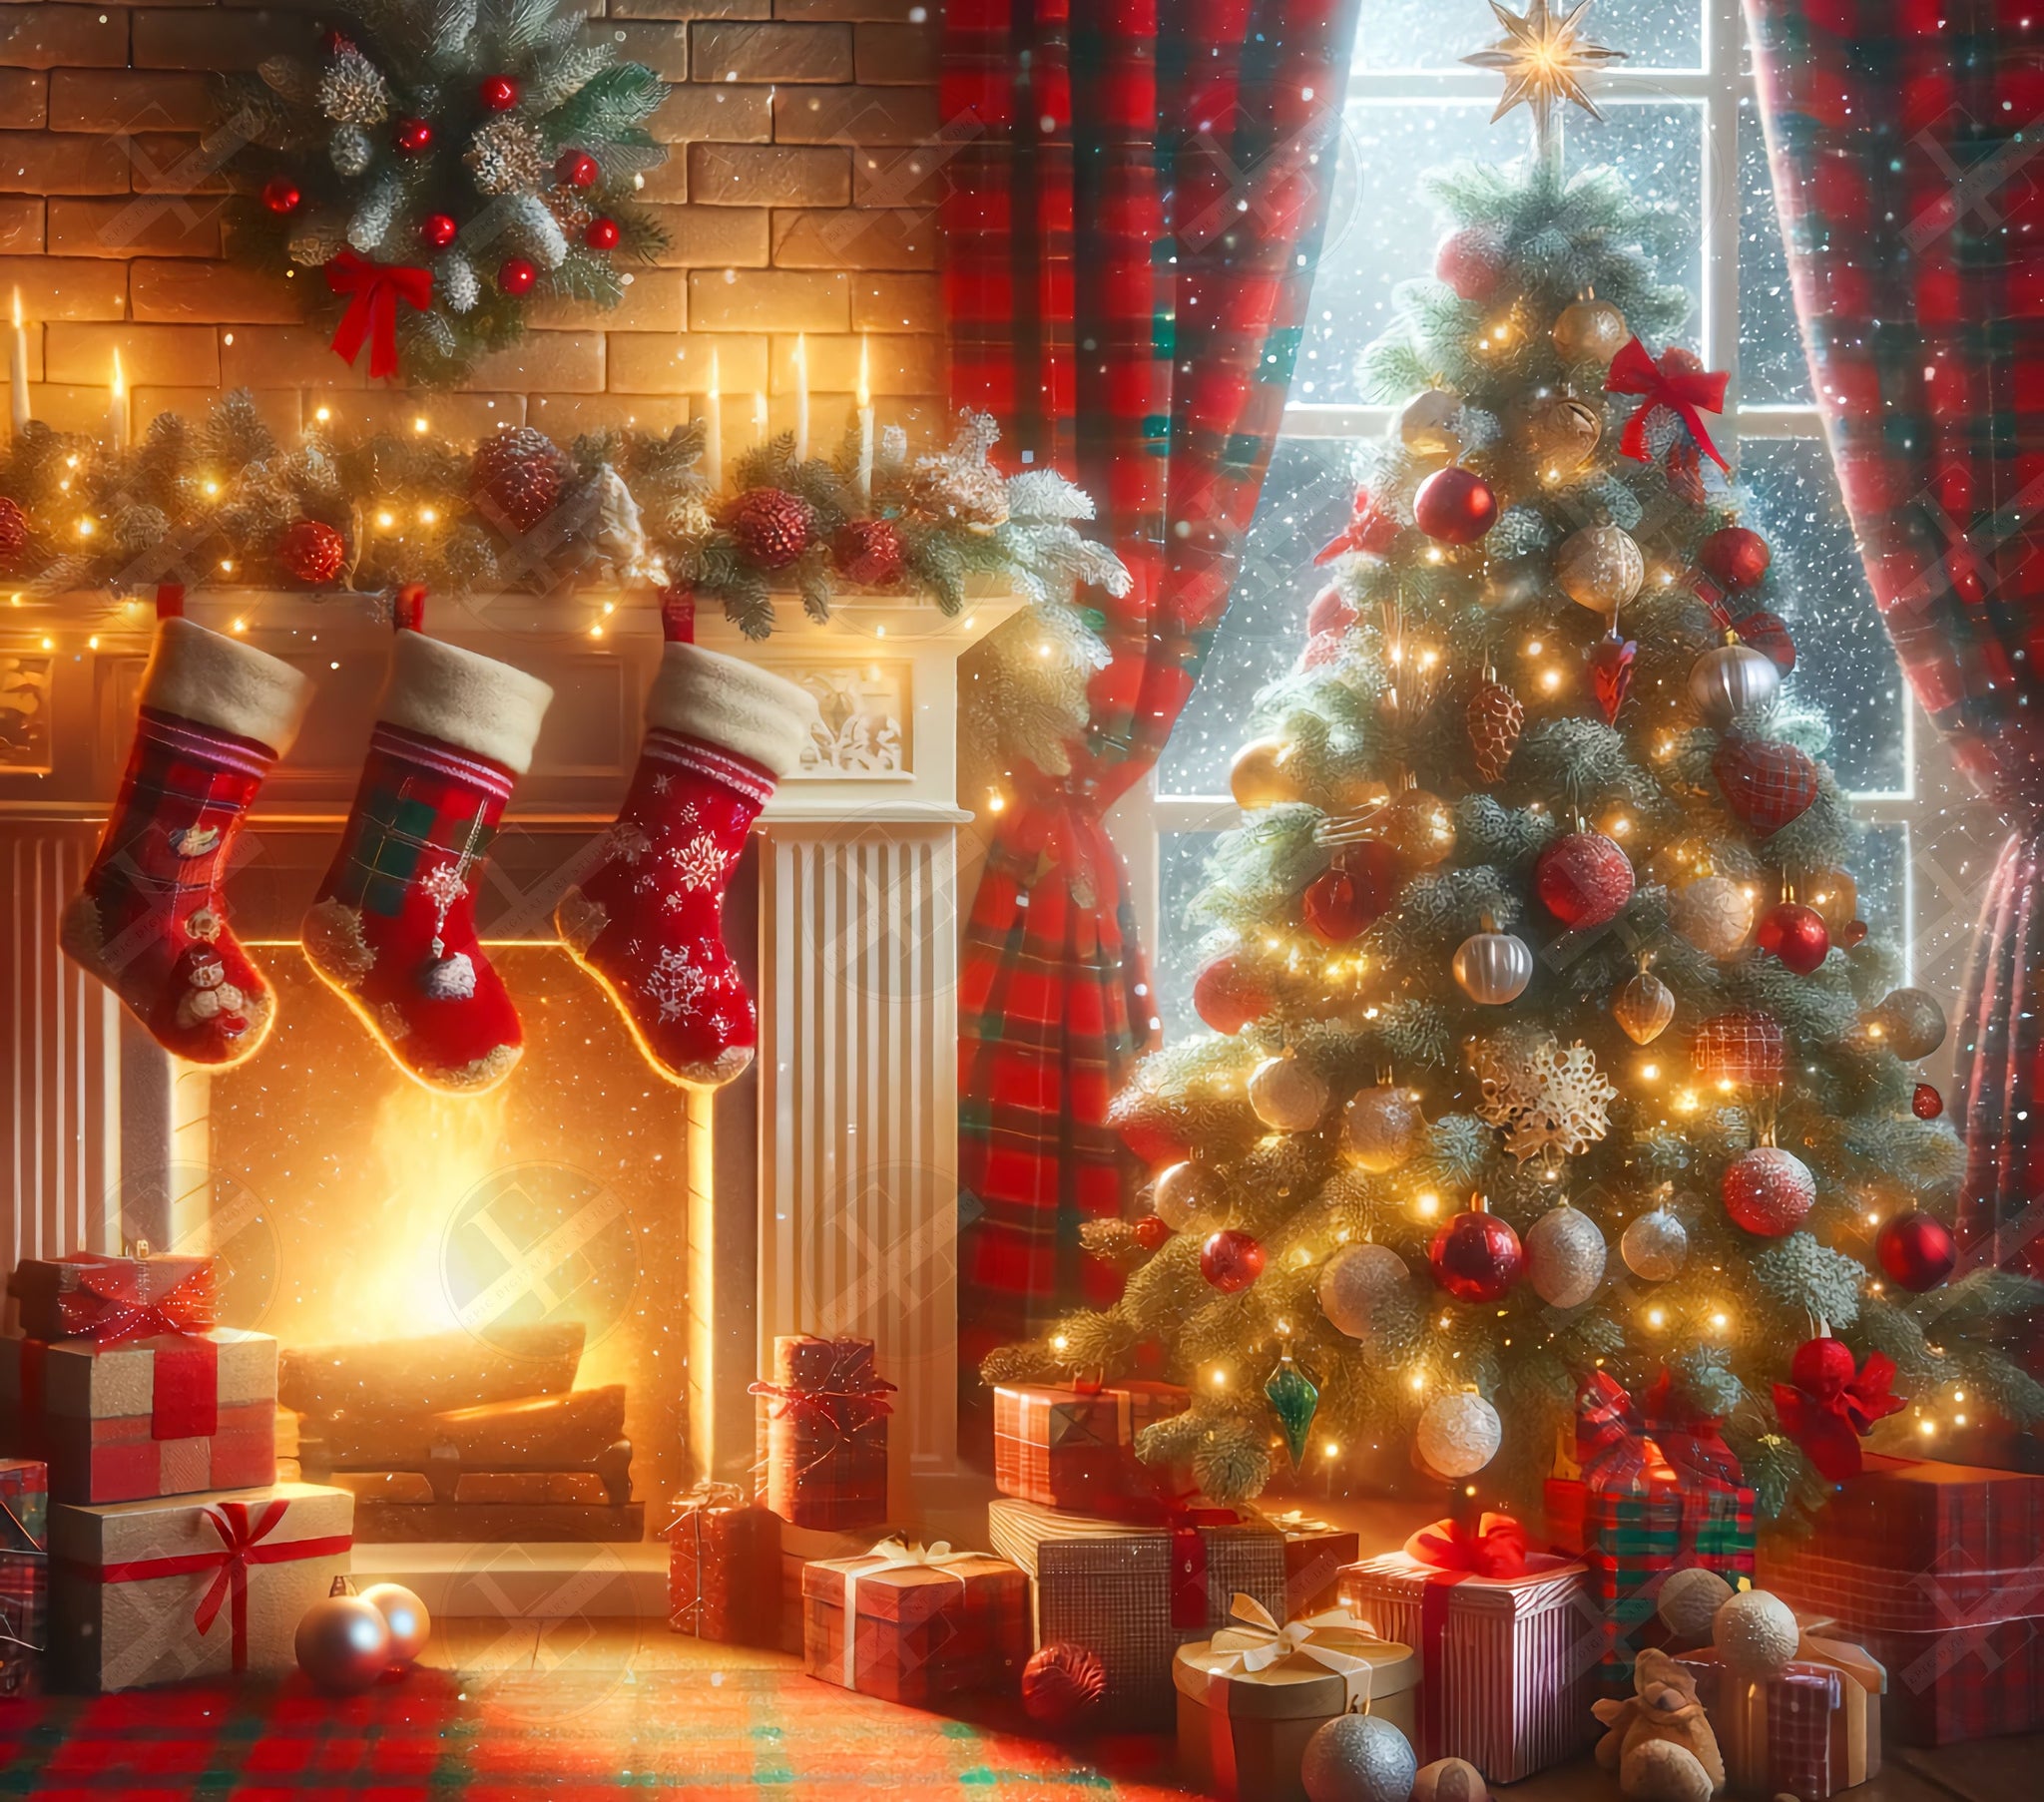 Fireplace Scene Skinny Tumbler Wrap Design - Christmas Tumbler Wraps - Tumbler Sublimation Designs Straight & Tapered - Instant Download